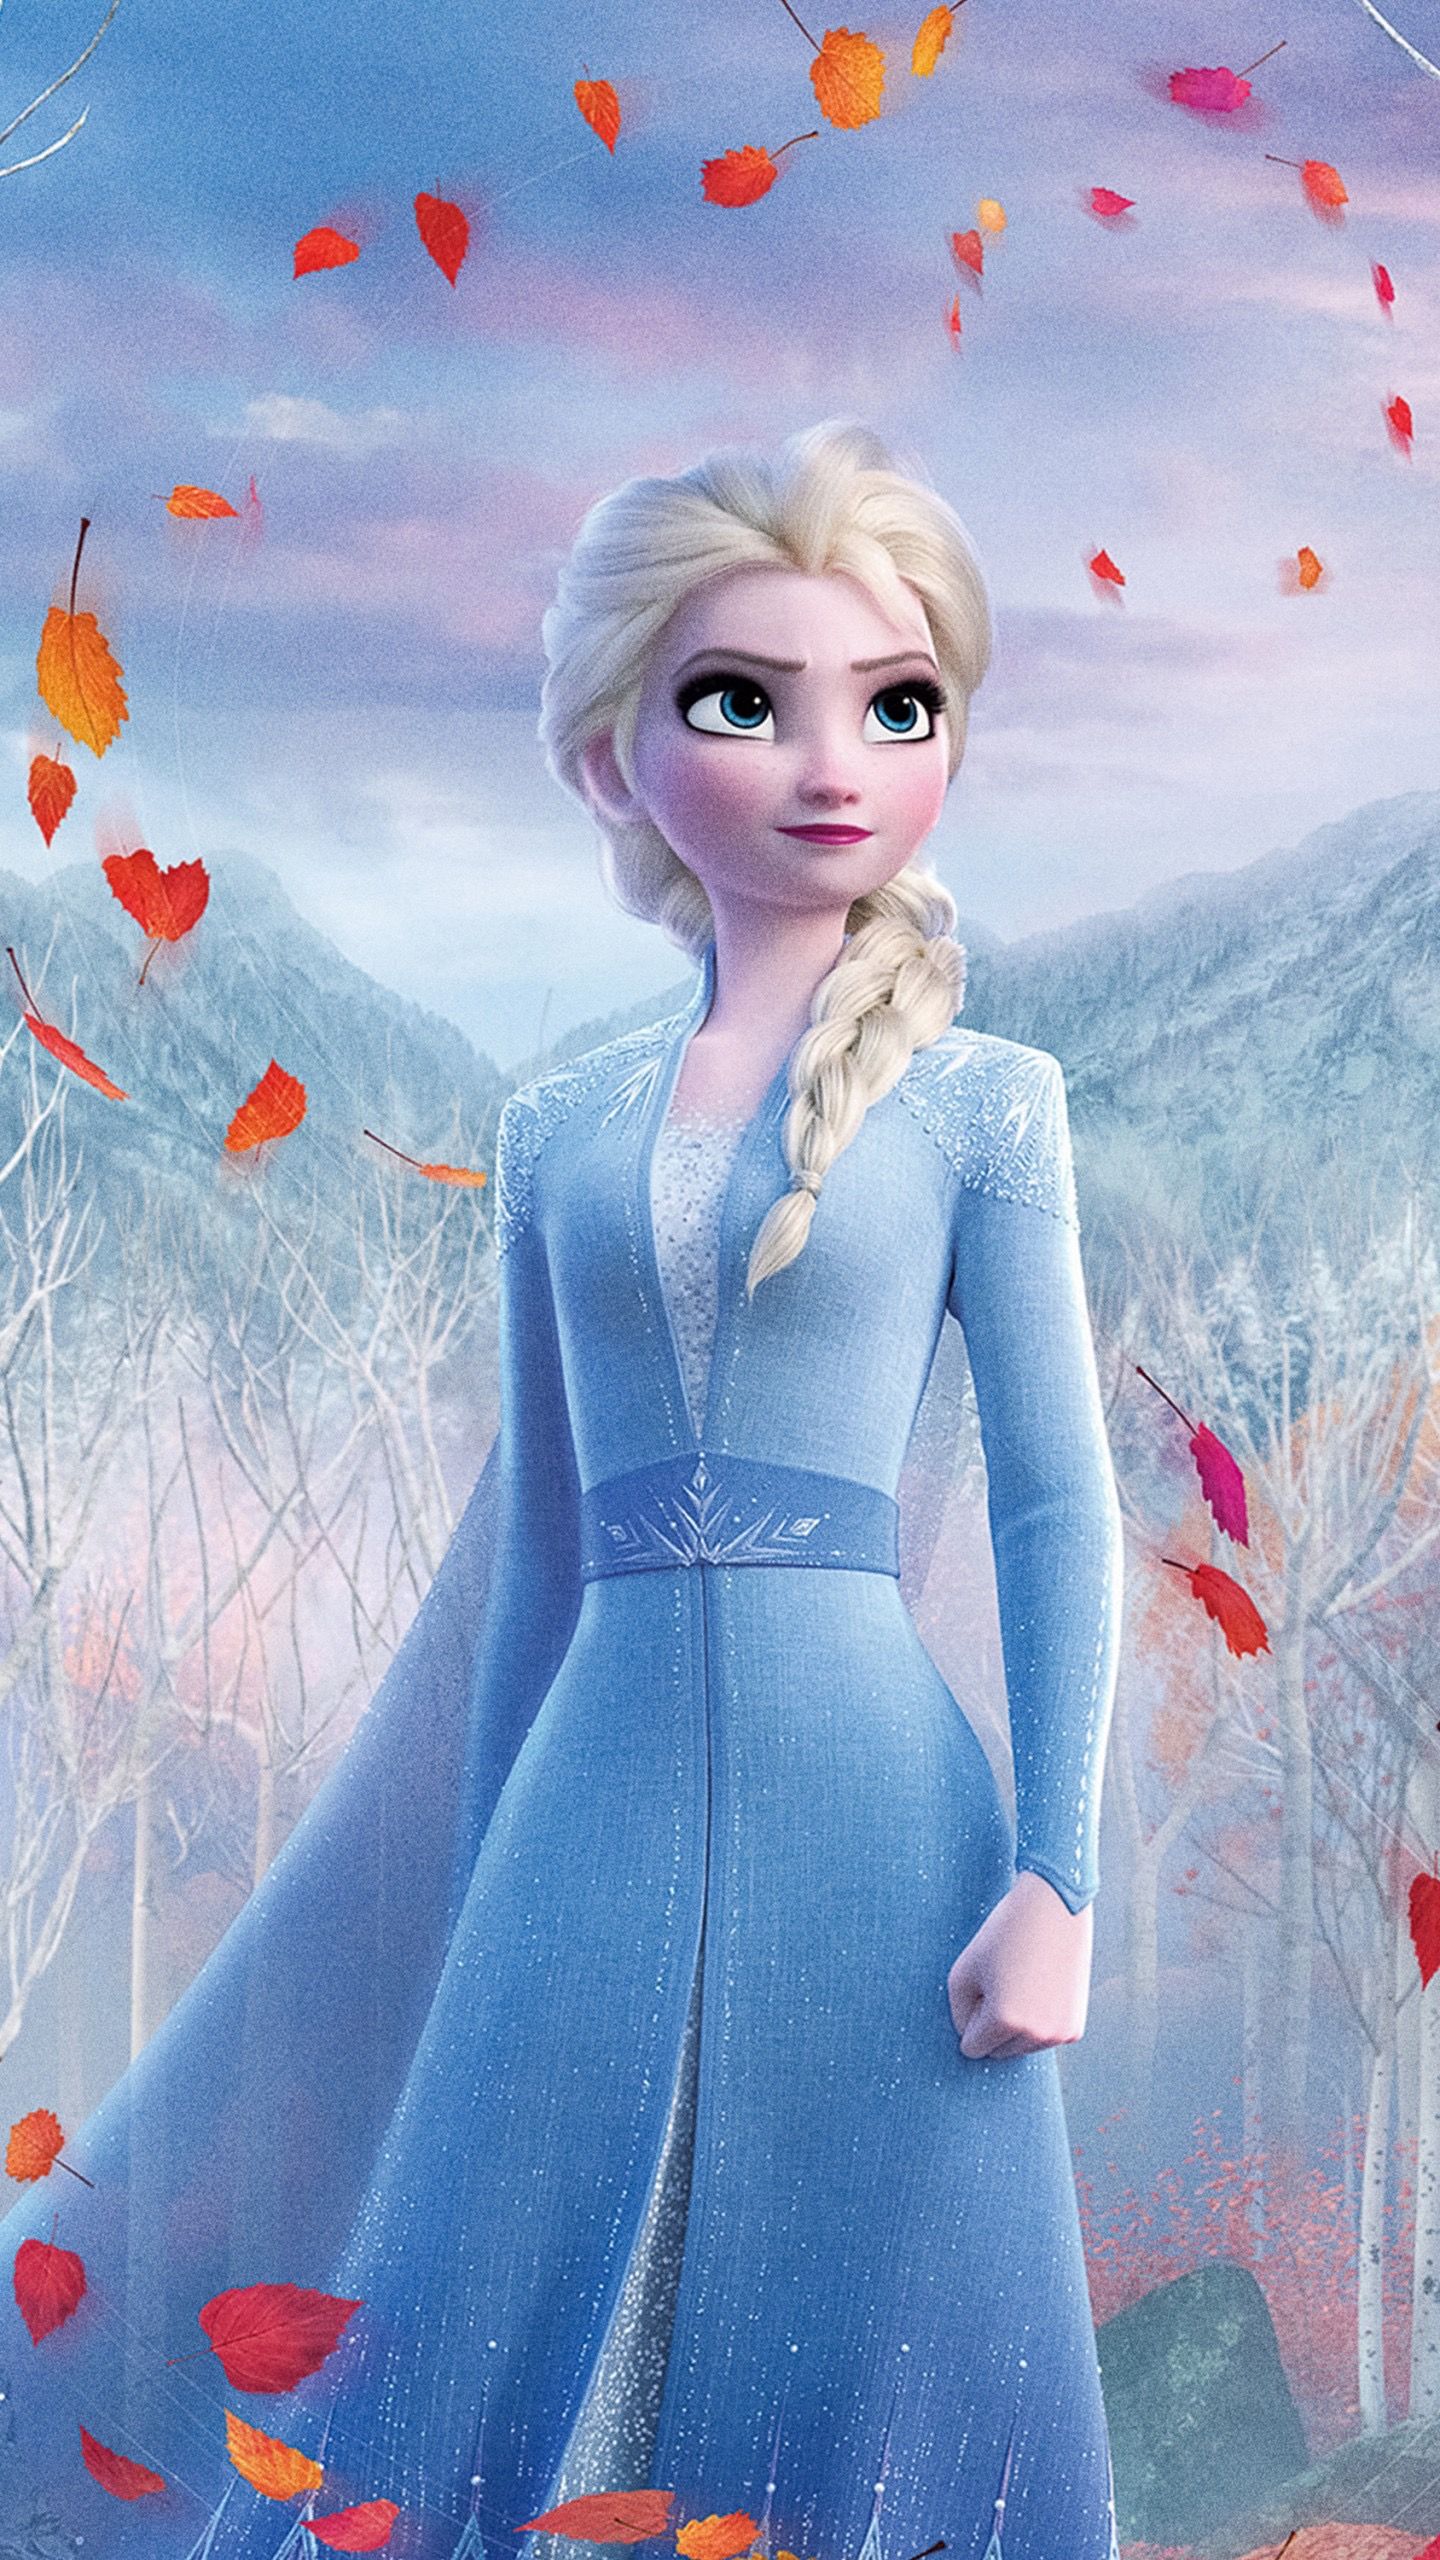 Frozen ❄️. Frozen wallpaper, Disney princess elsa, Disney princess wallpaper